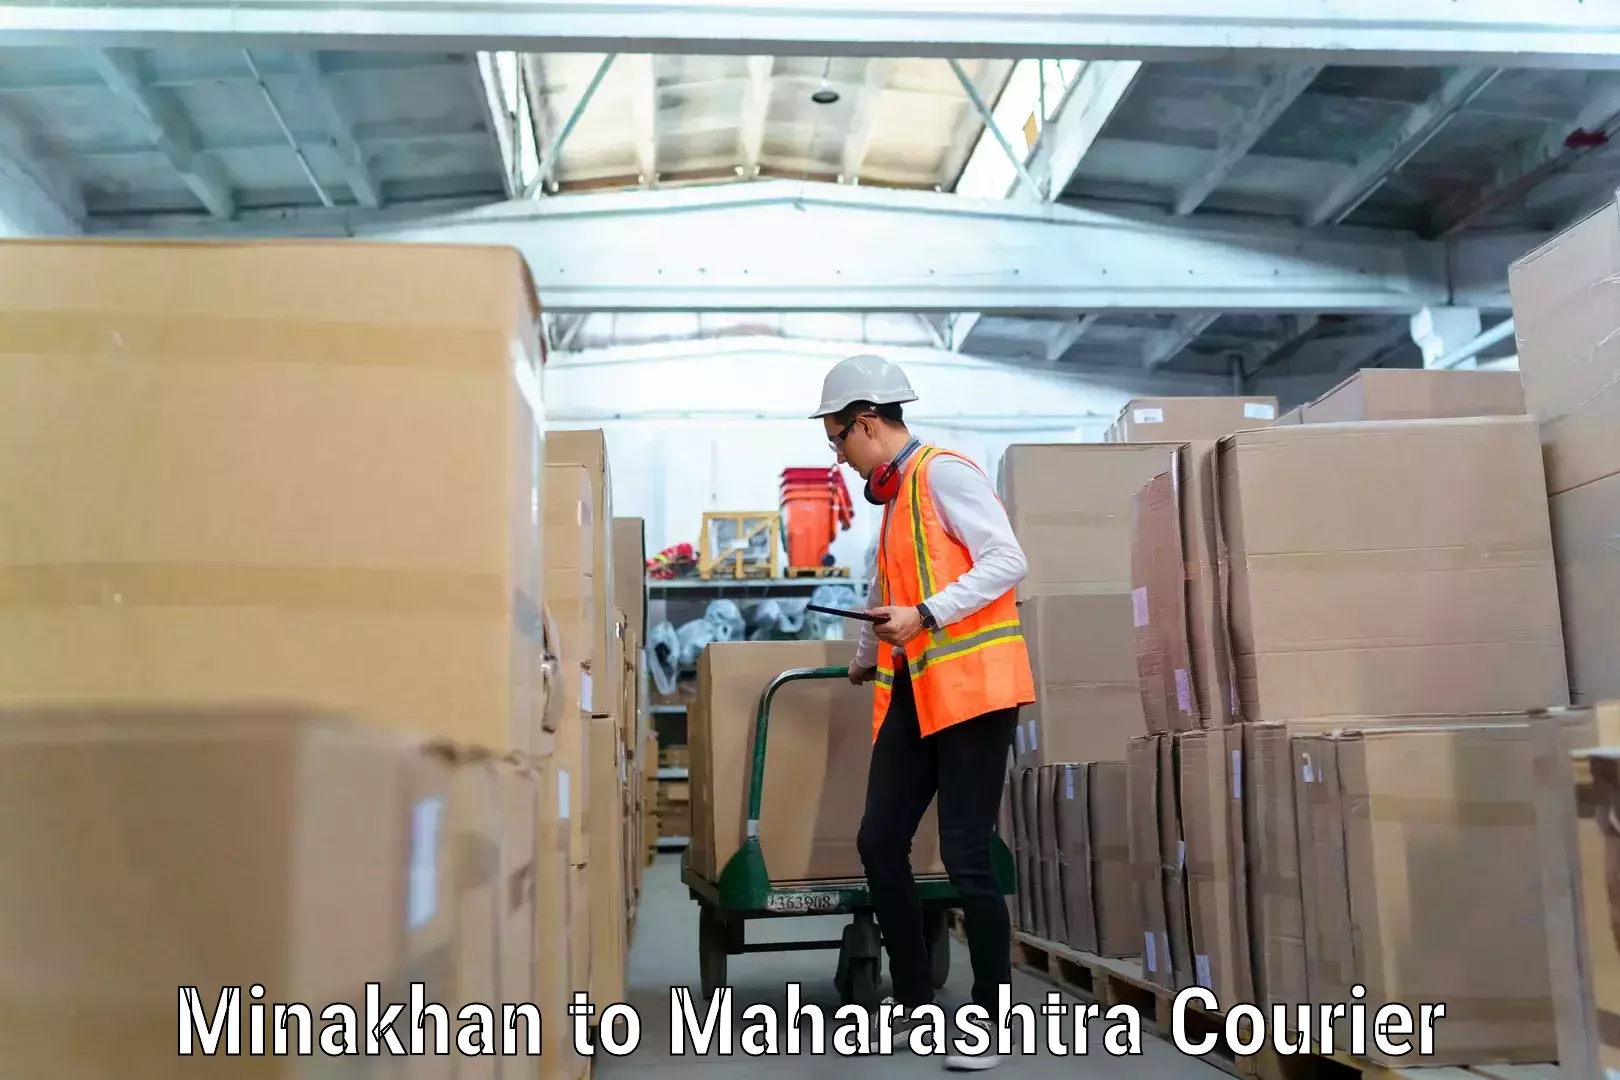 Furniture moving specialists Minakhan to Maharashtra